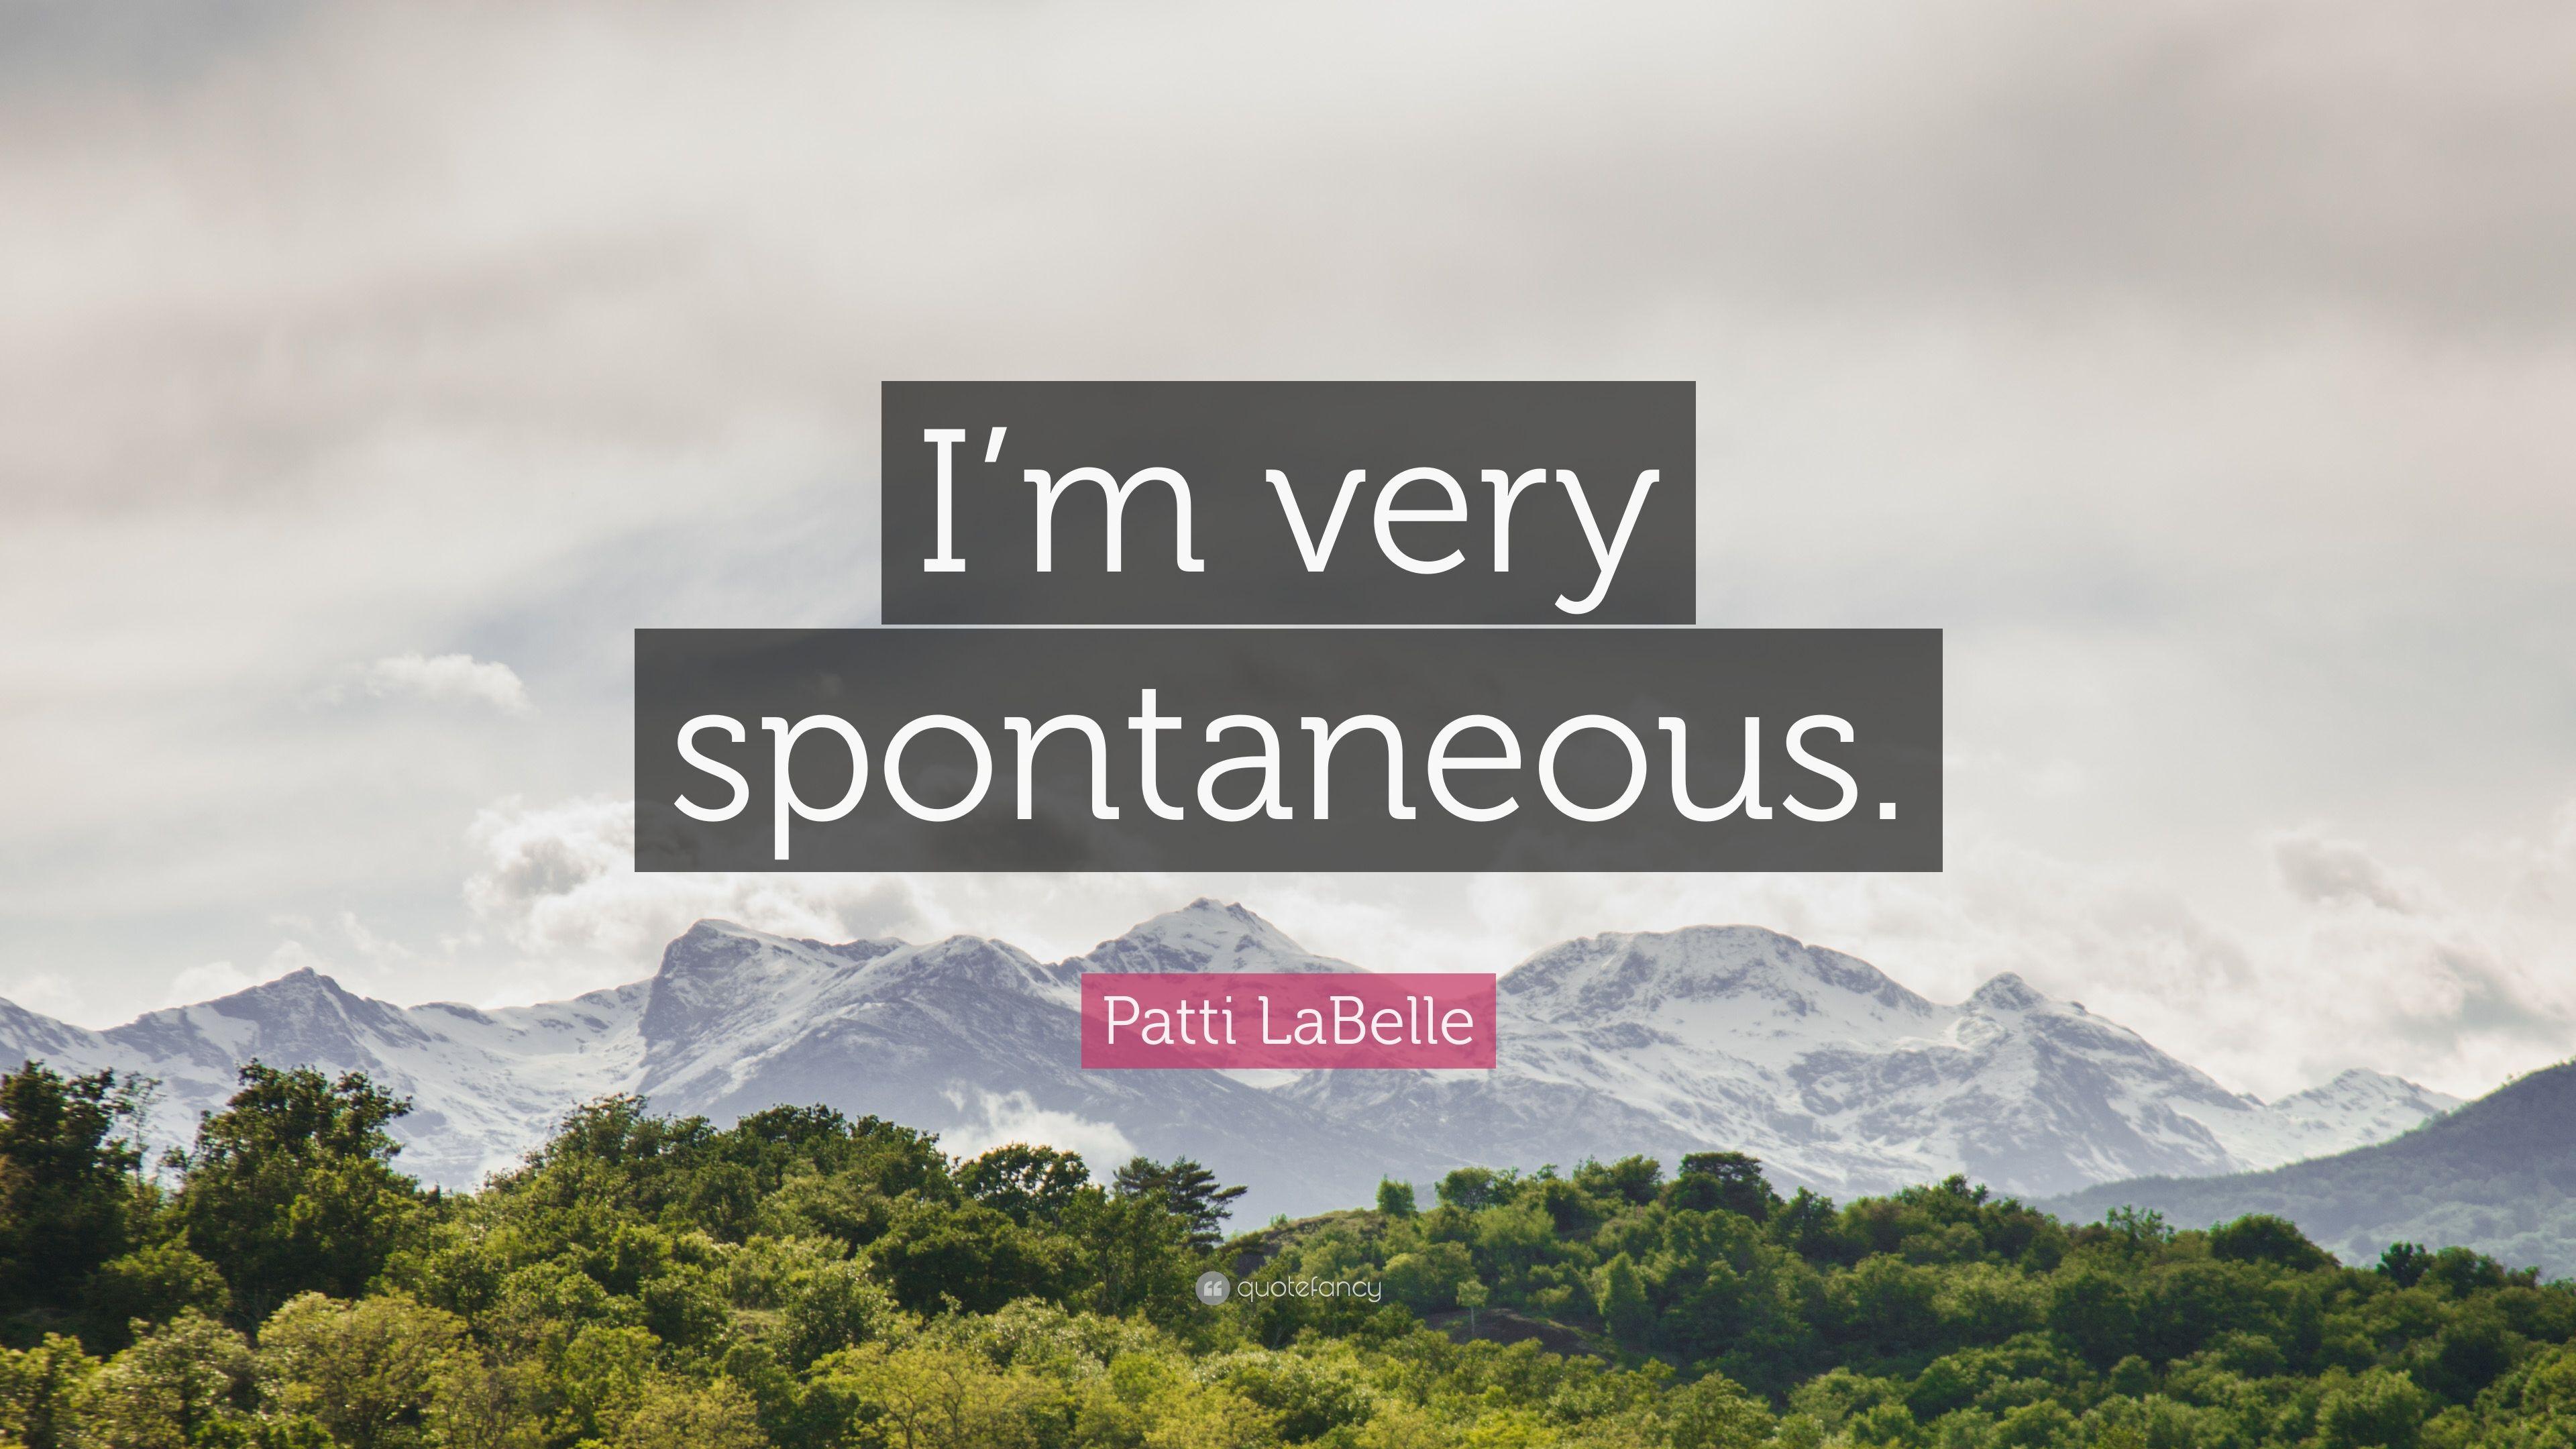 Patti LaBelle Quote: “I'm very spontaneous.” (7 wallpaper)